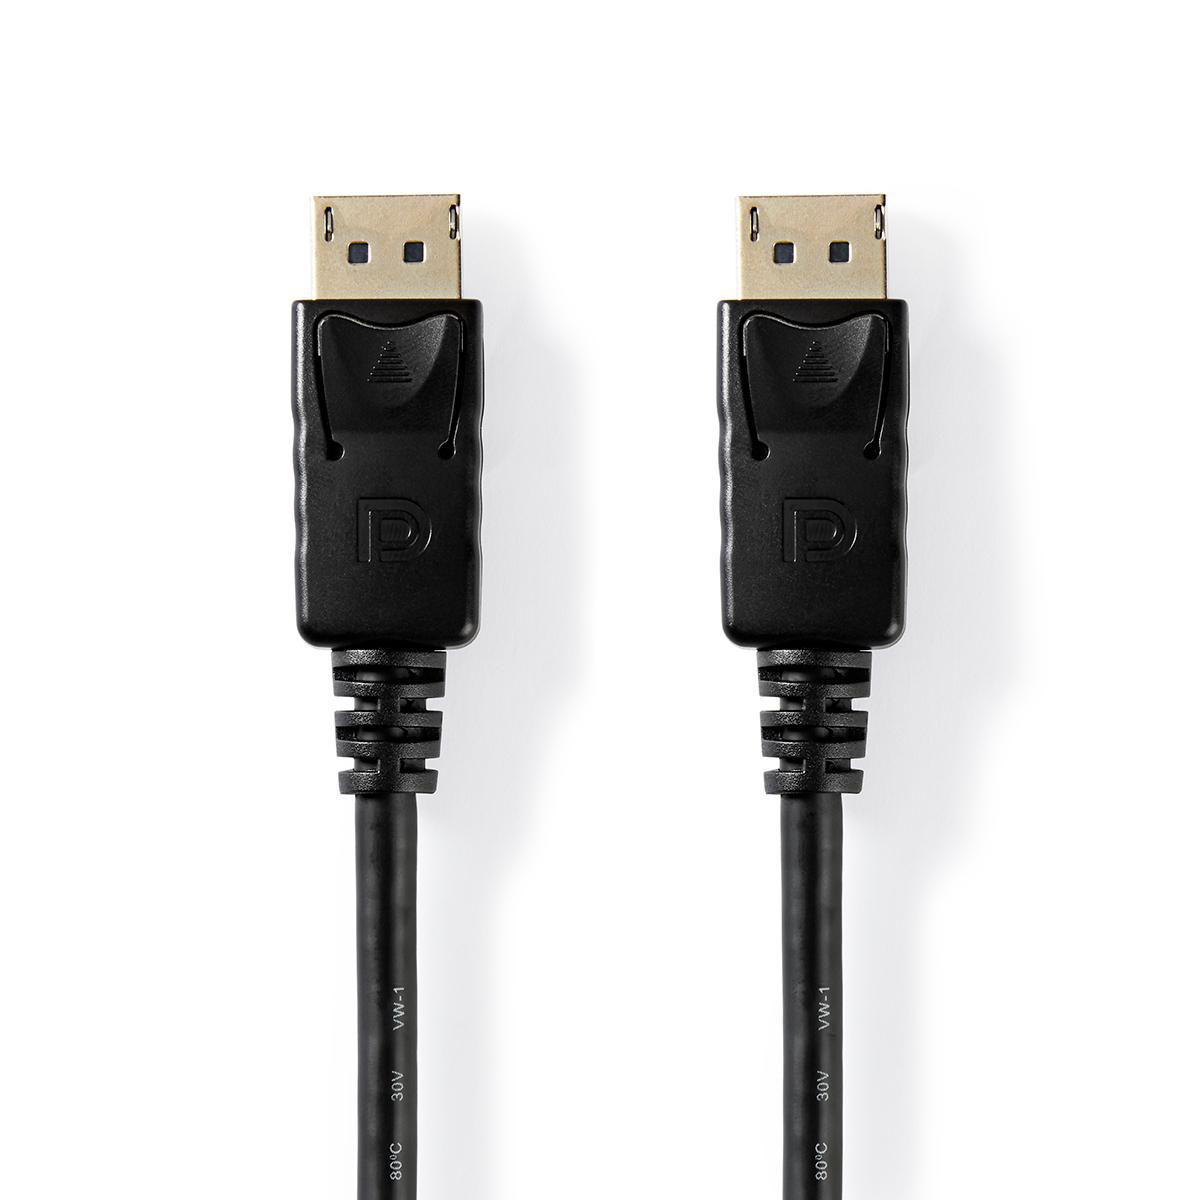 NEDIS 2.00 Displayport-Kabel, m CCGT37010BK20